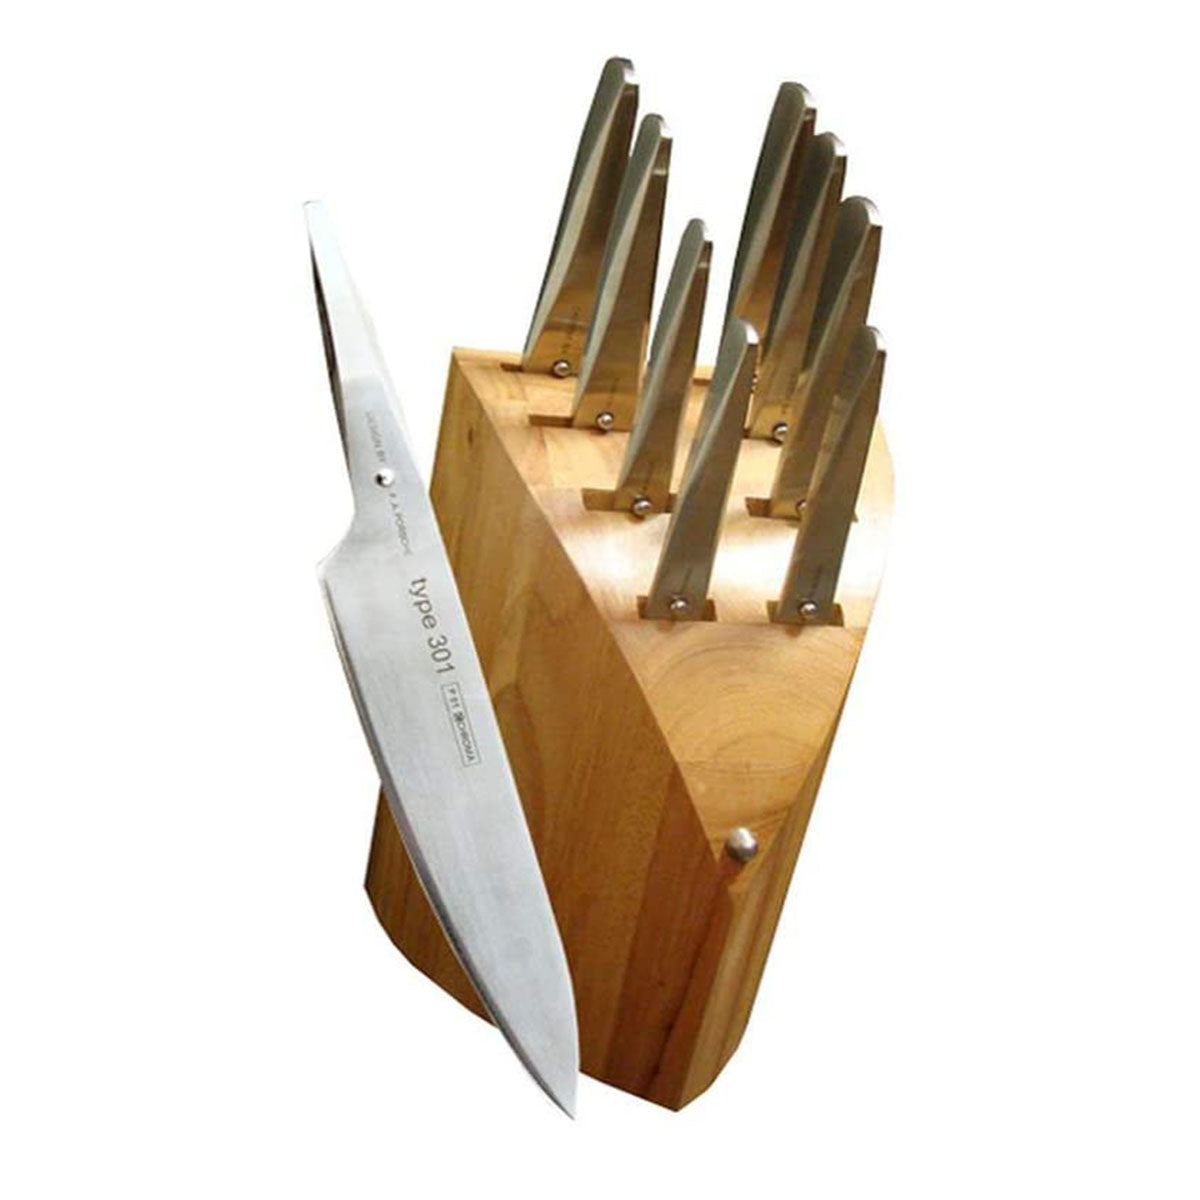 9 Piece Japanese Chef Knife Set 